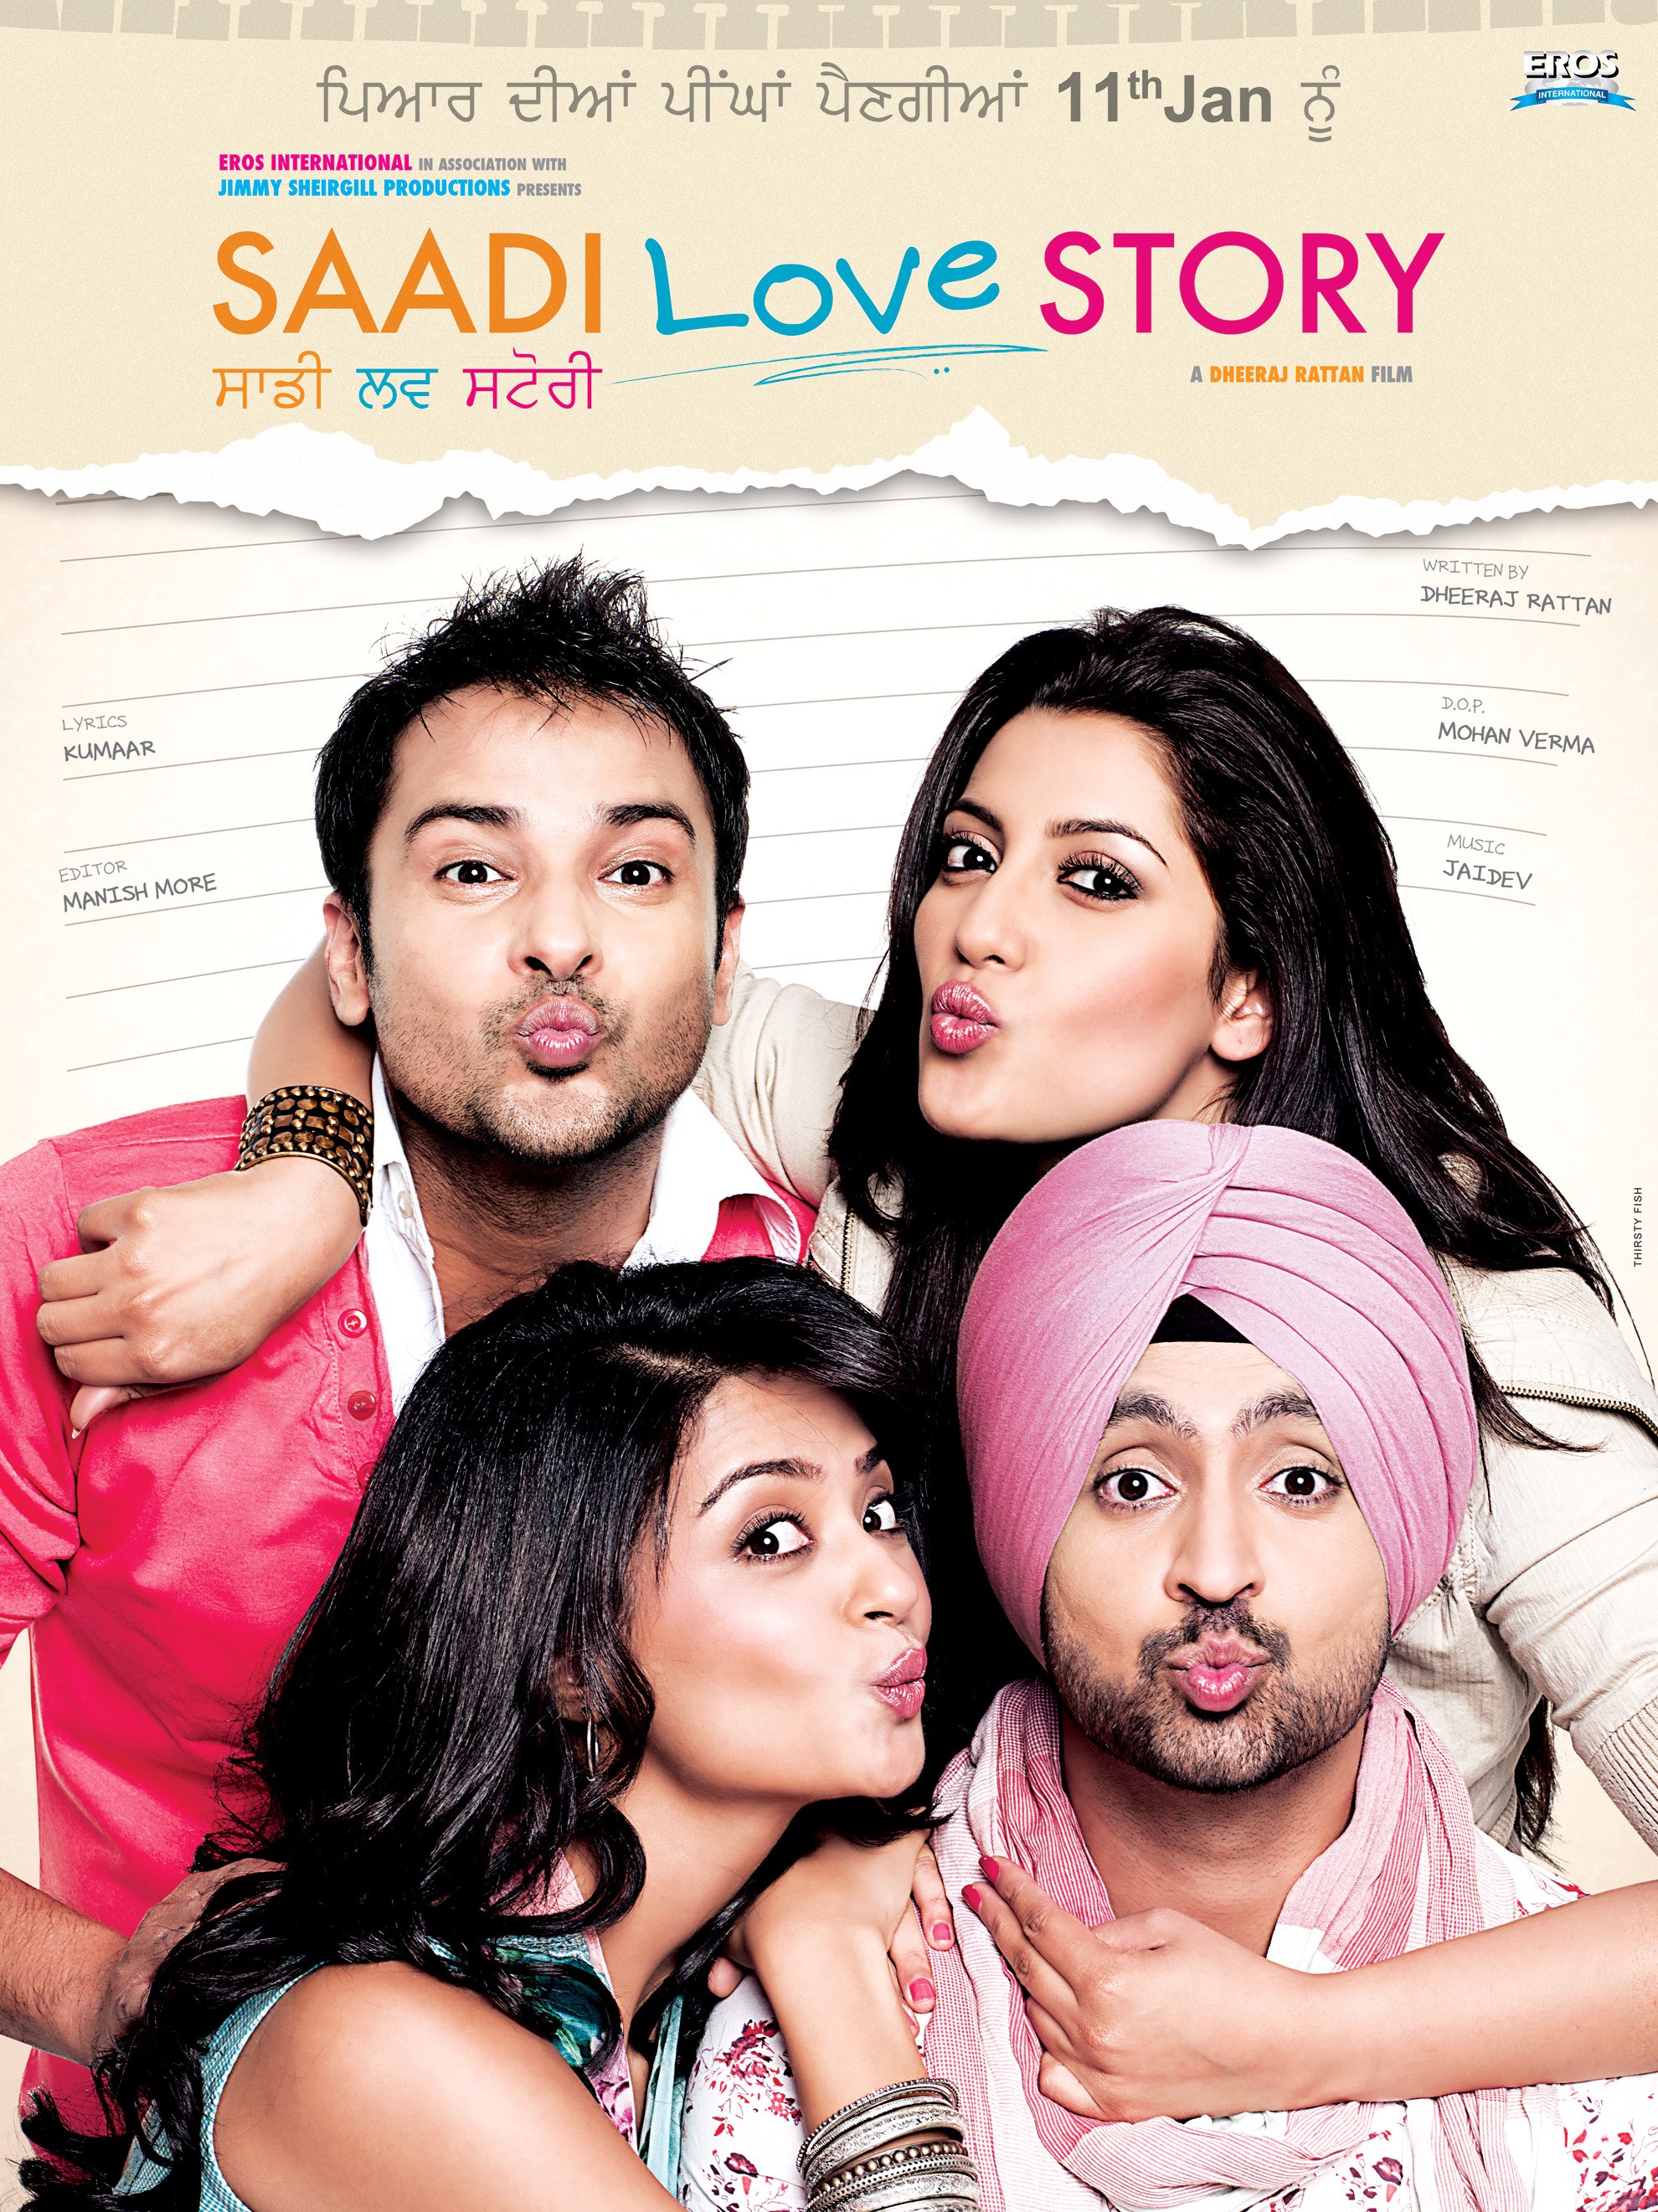 Mega Sized Movie Poster Image for Saadi Love Story (#1 of 5)